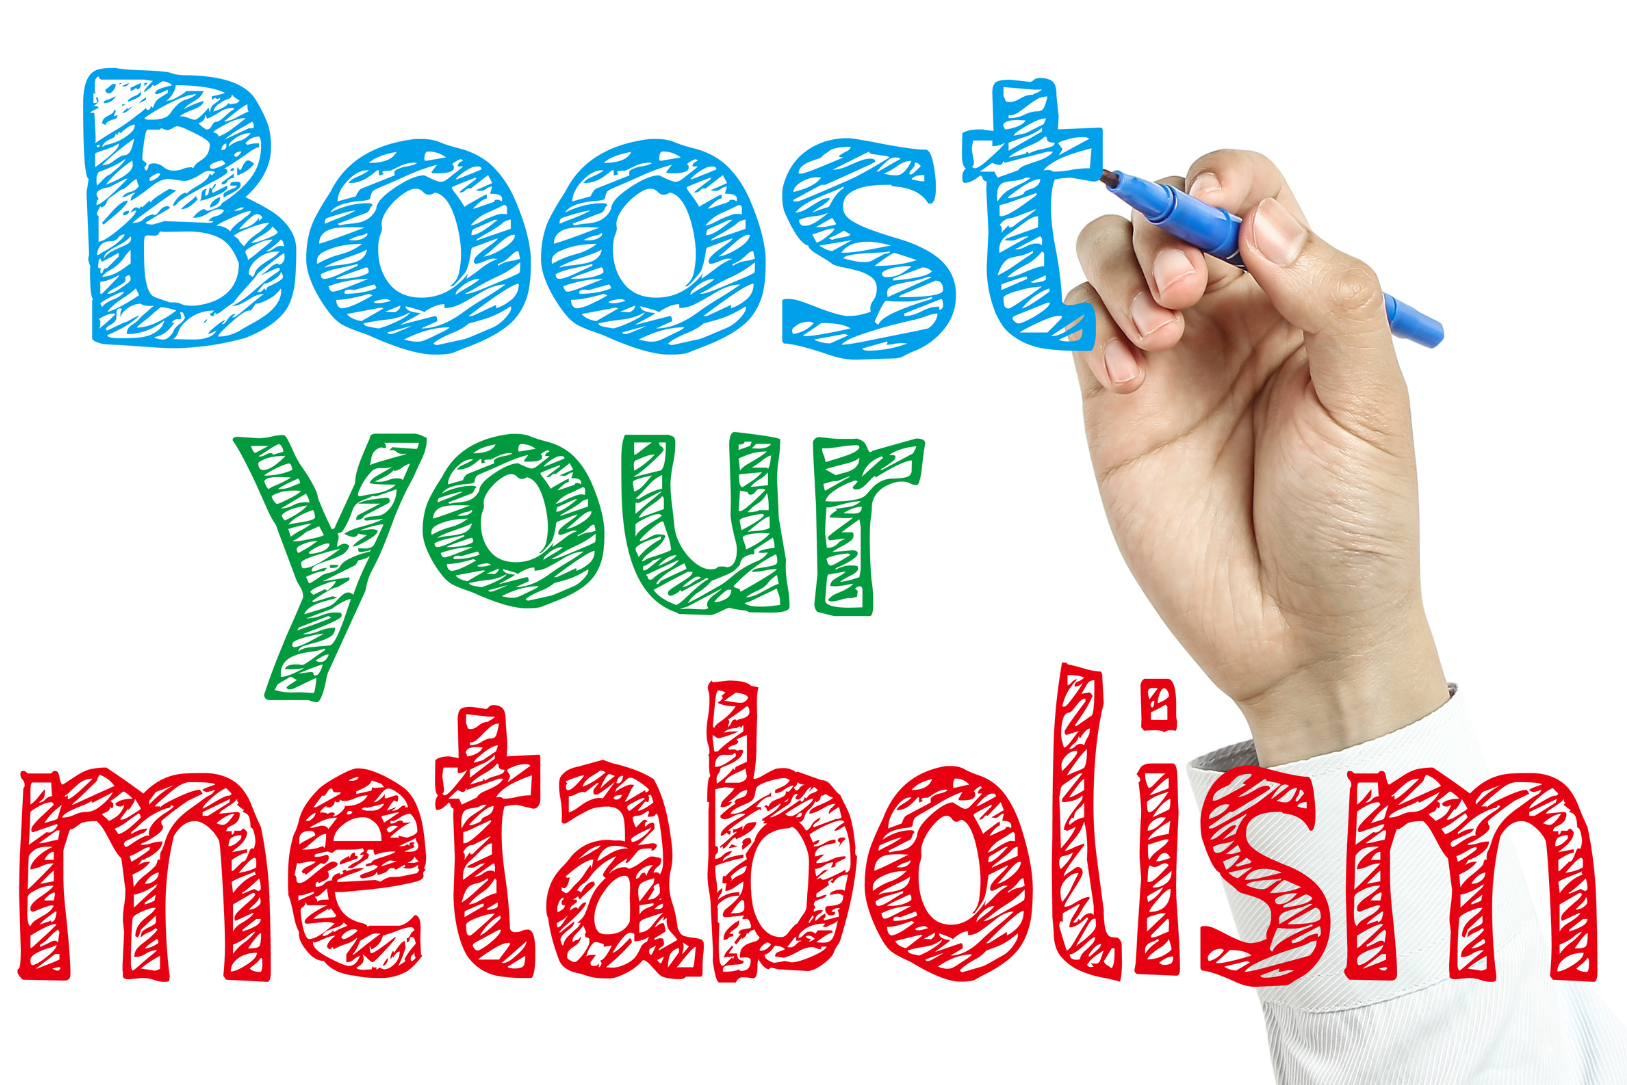 Stoffwechsel Kollage Boost your metabolism